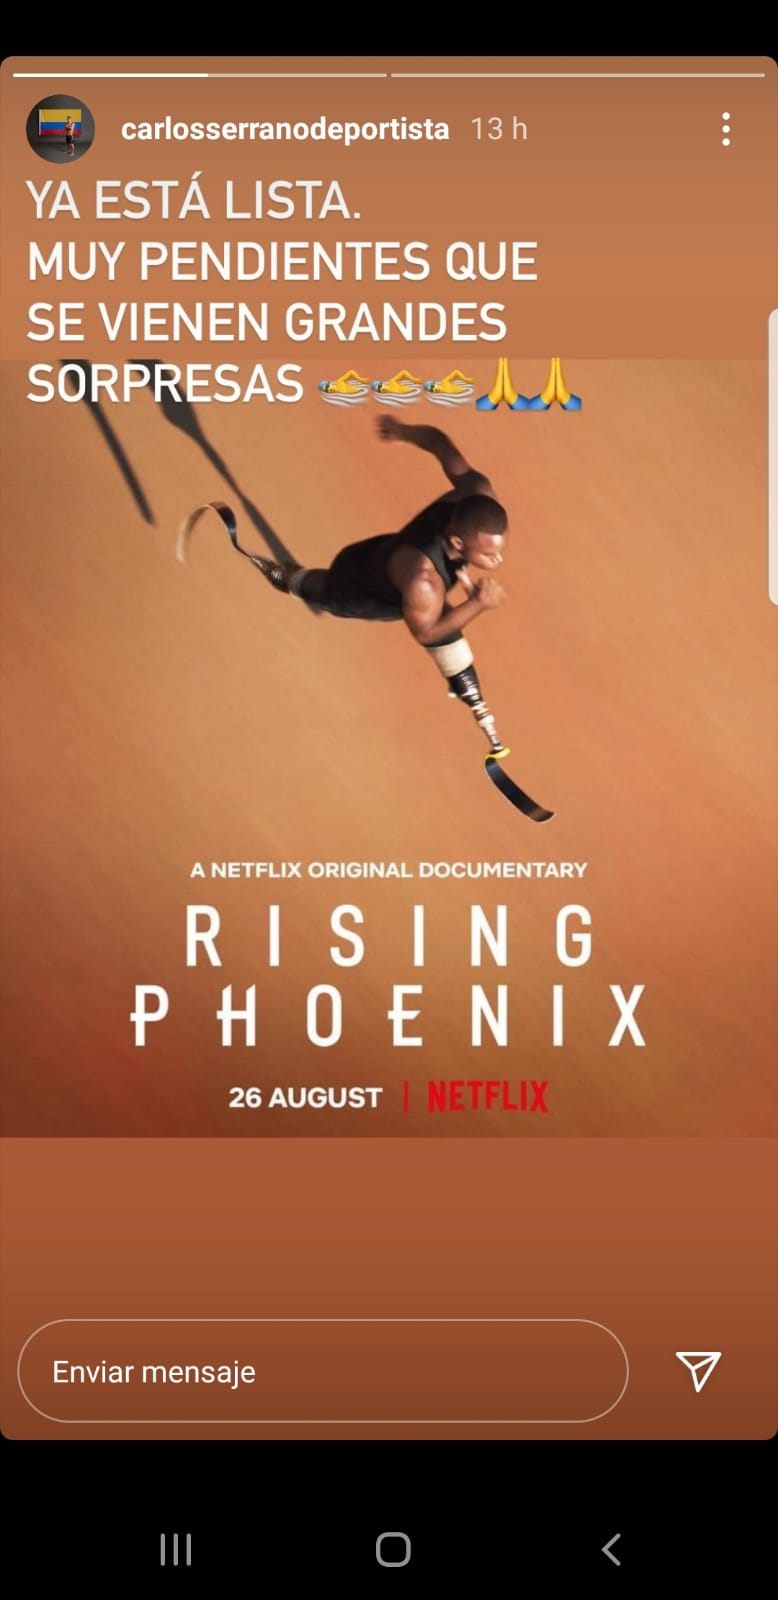 Carlos Serrano shares excitement for Rising Phoenix documentary